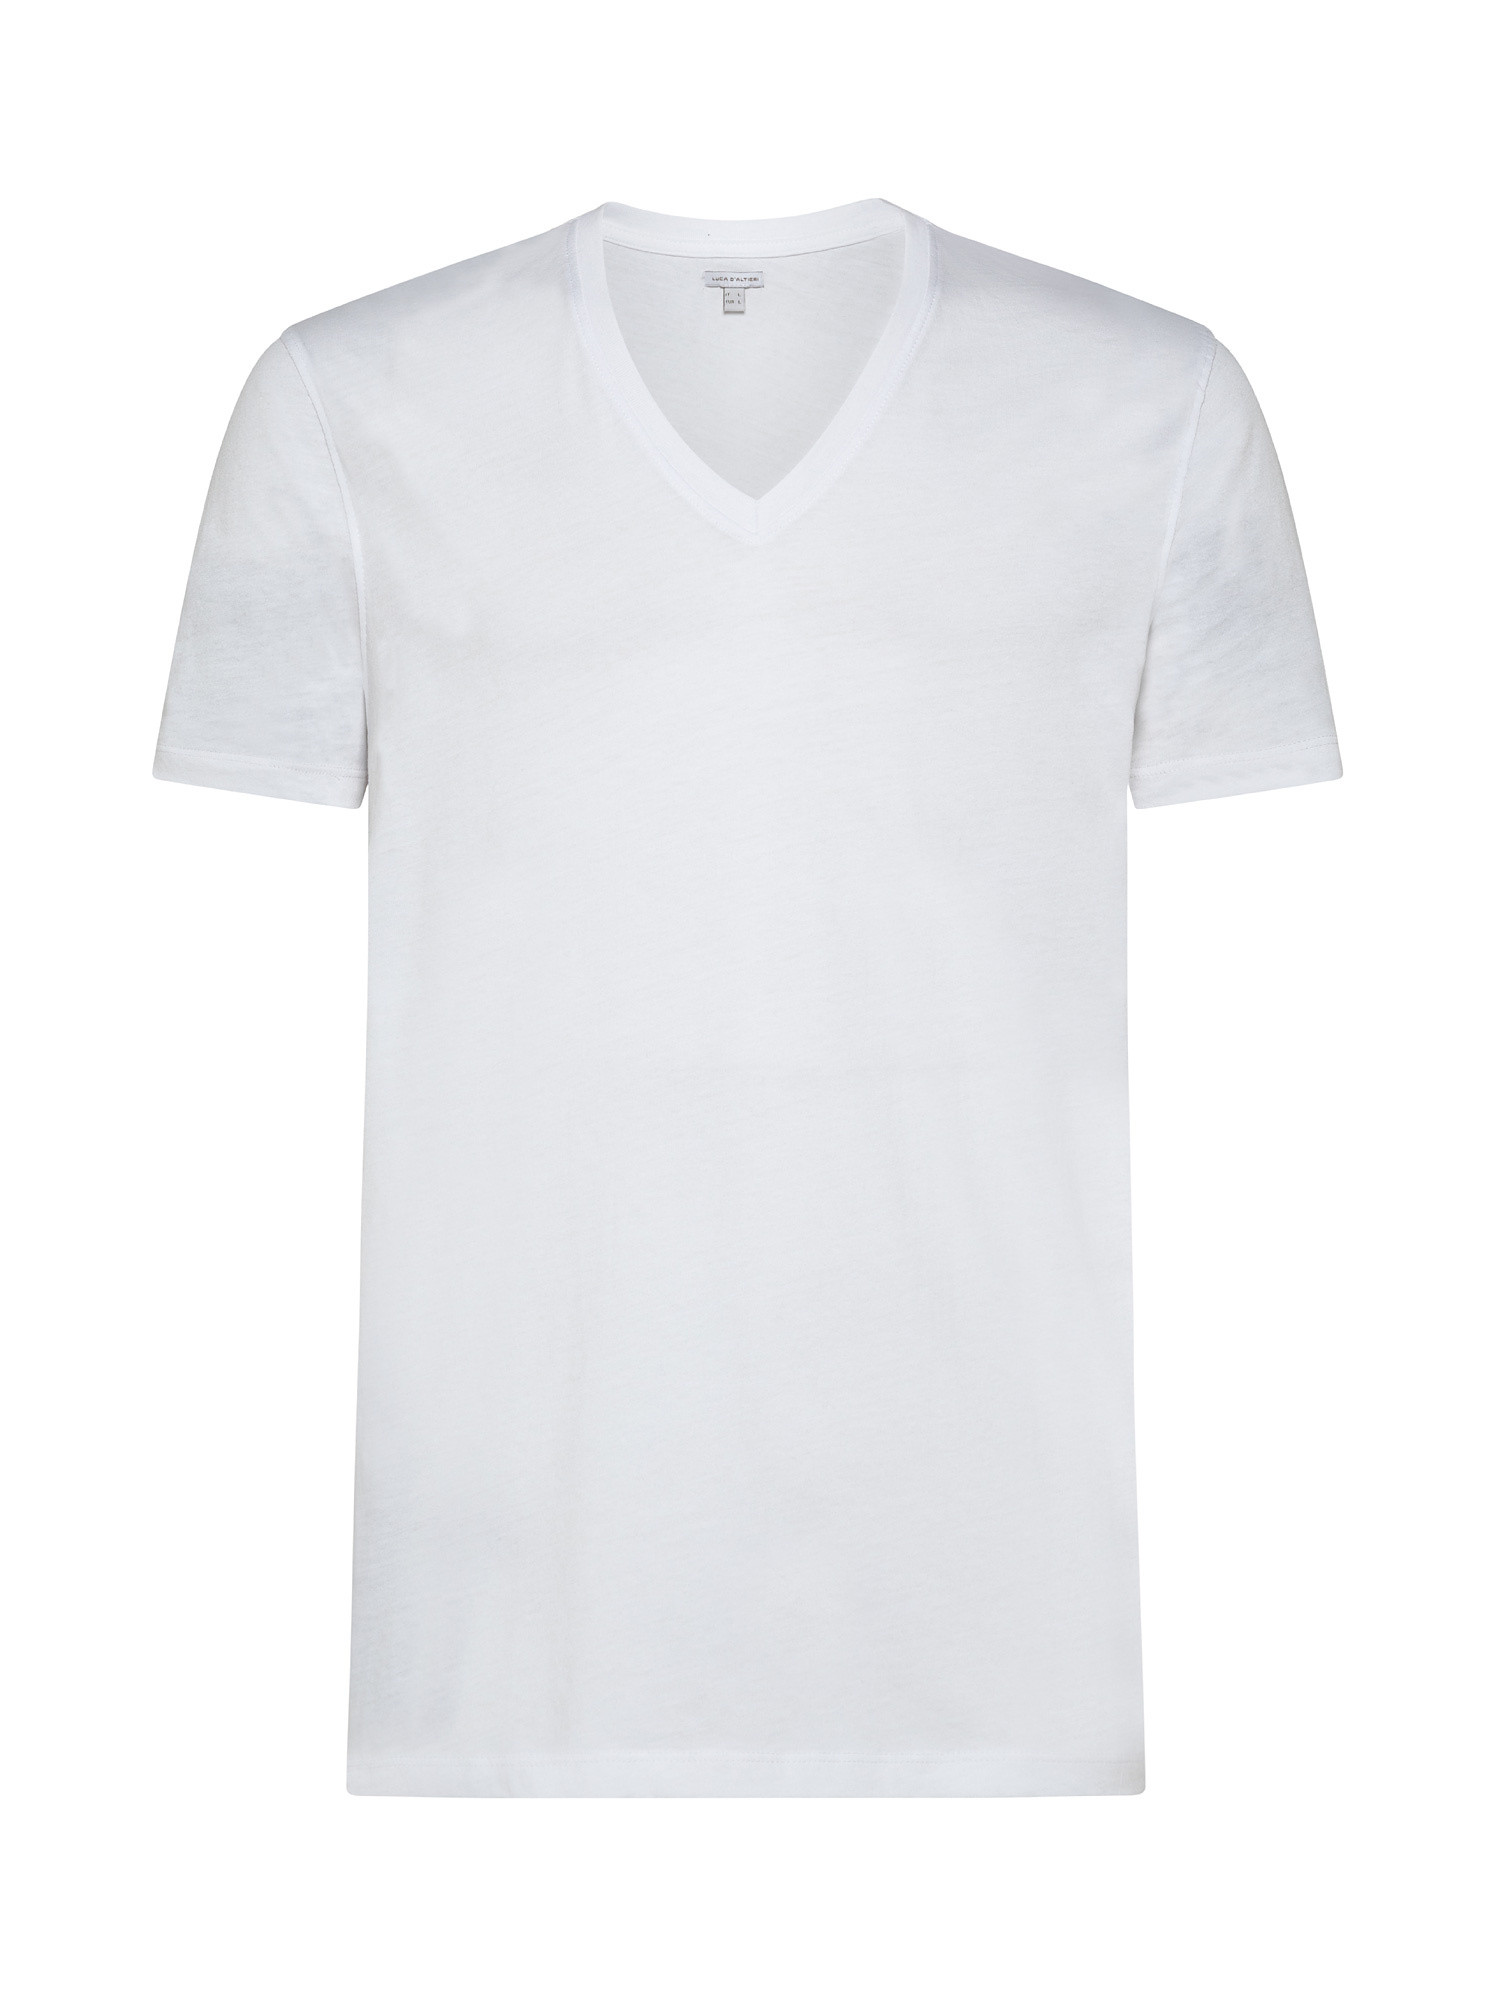 T-shirt scollo V cotone supima tinta unita, Bianco, large image number 0